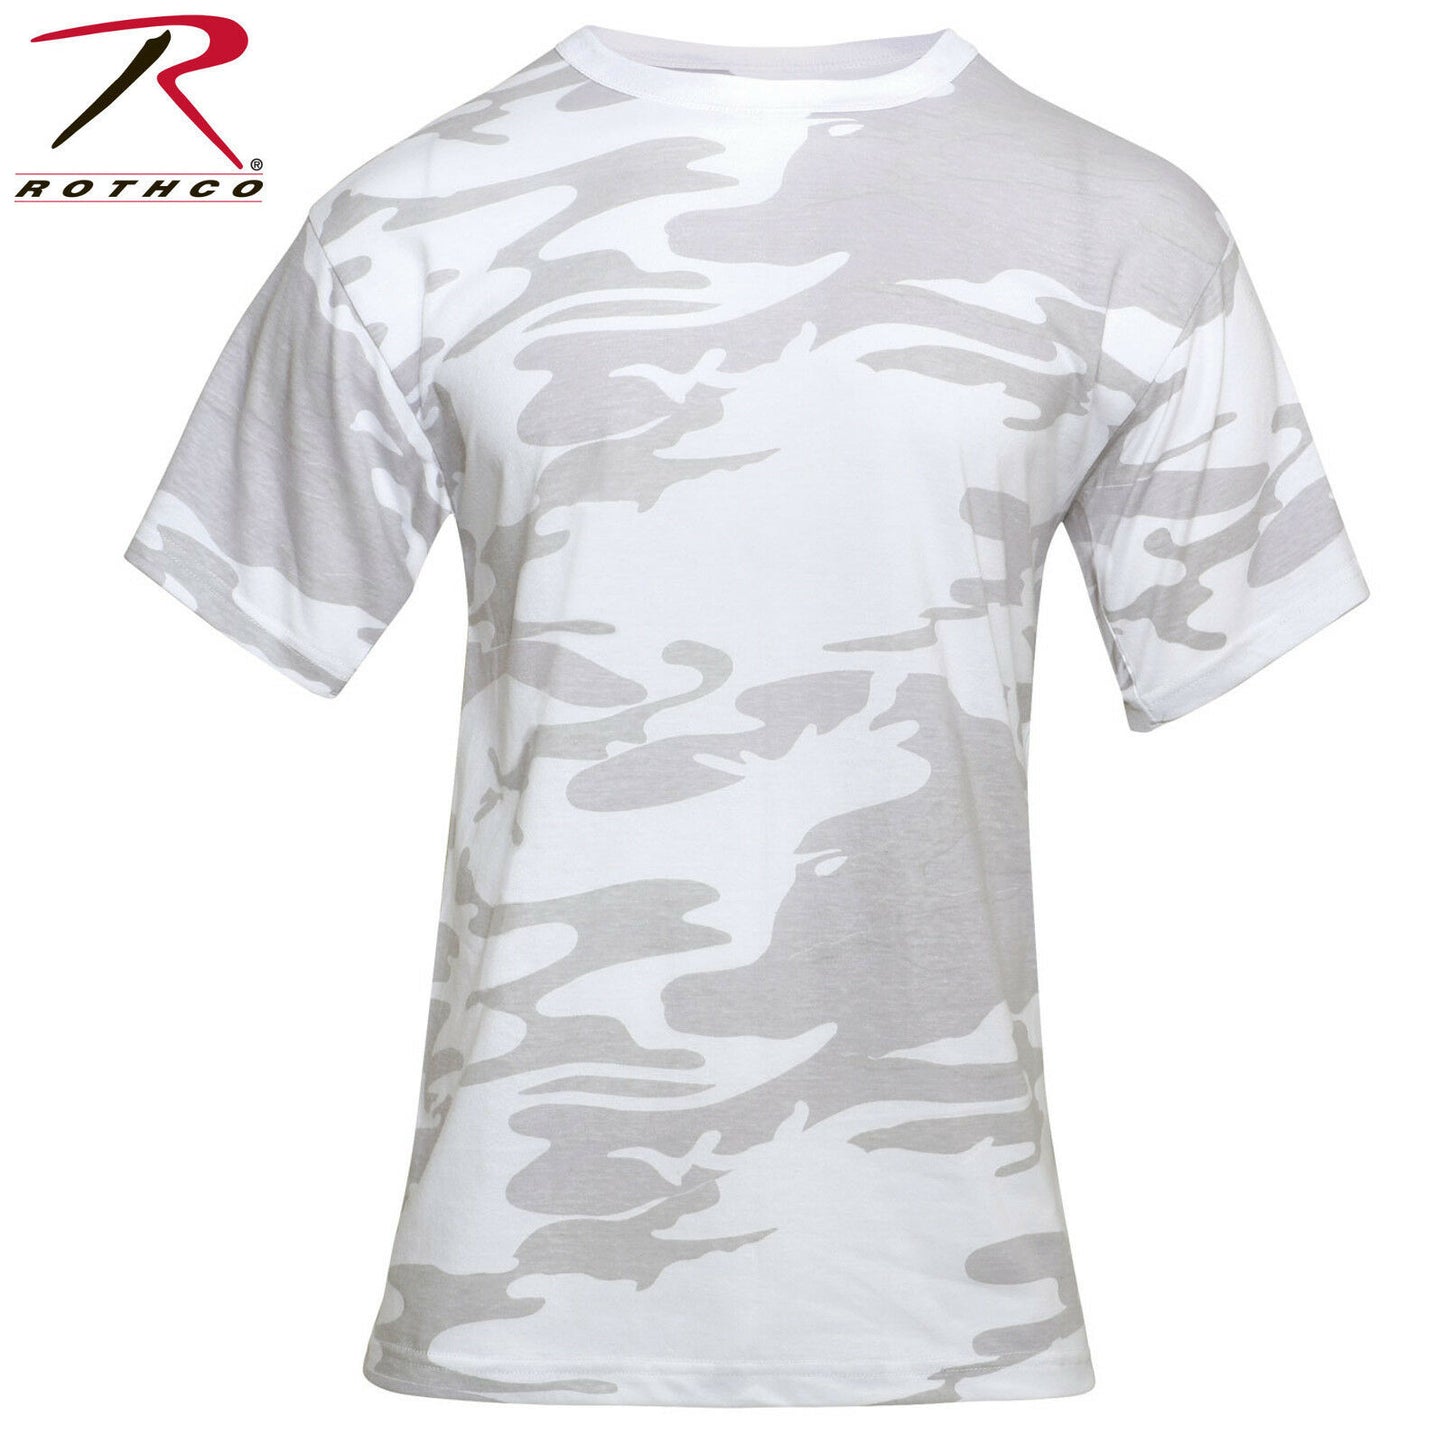 Rothco White Camo/Snow Camo T-Shirt - Camouflage Tees